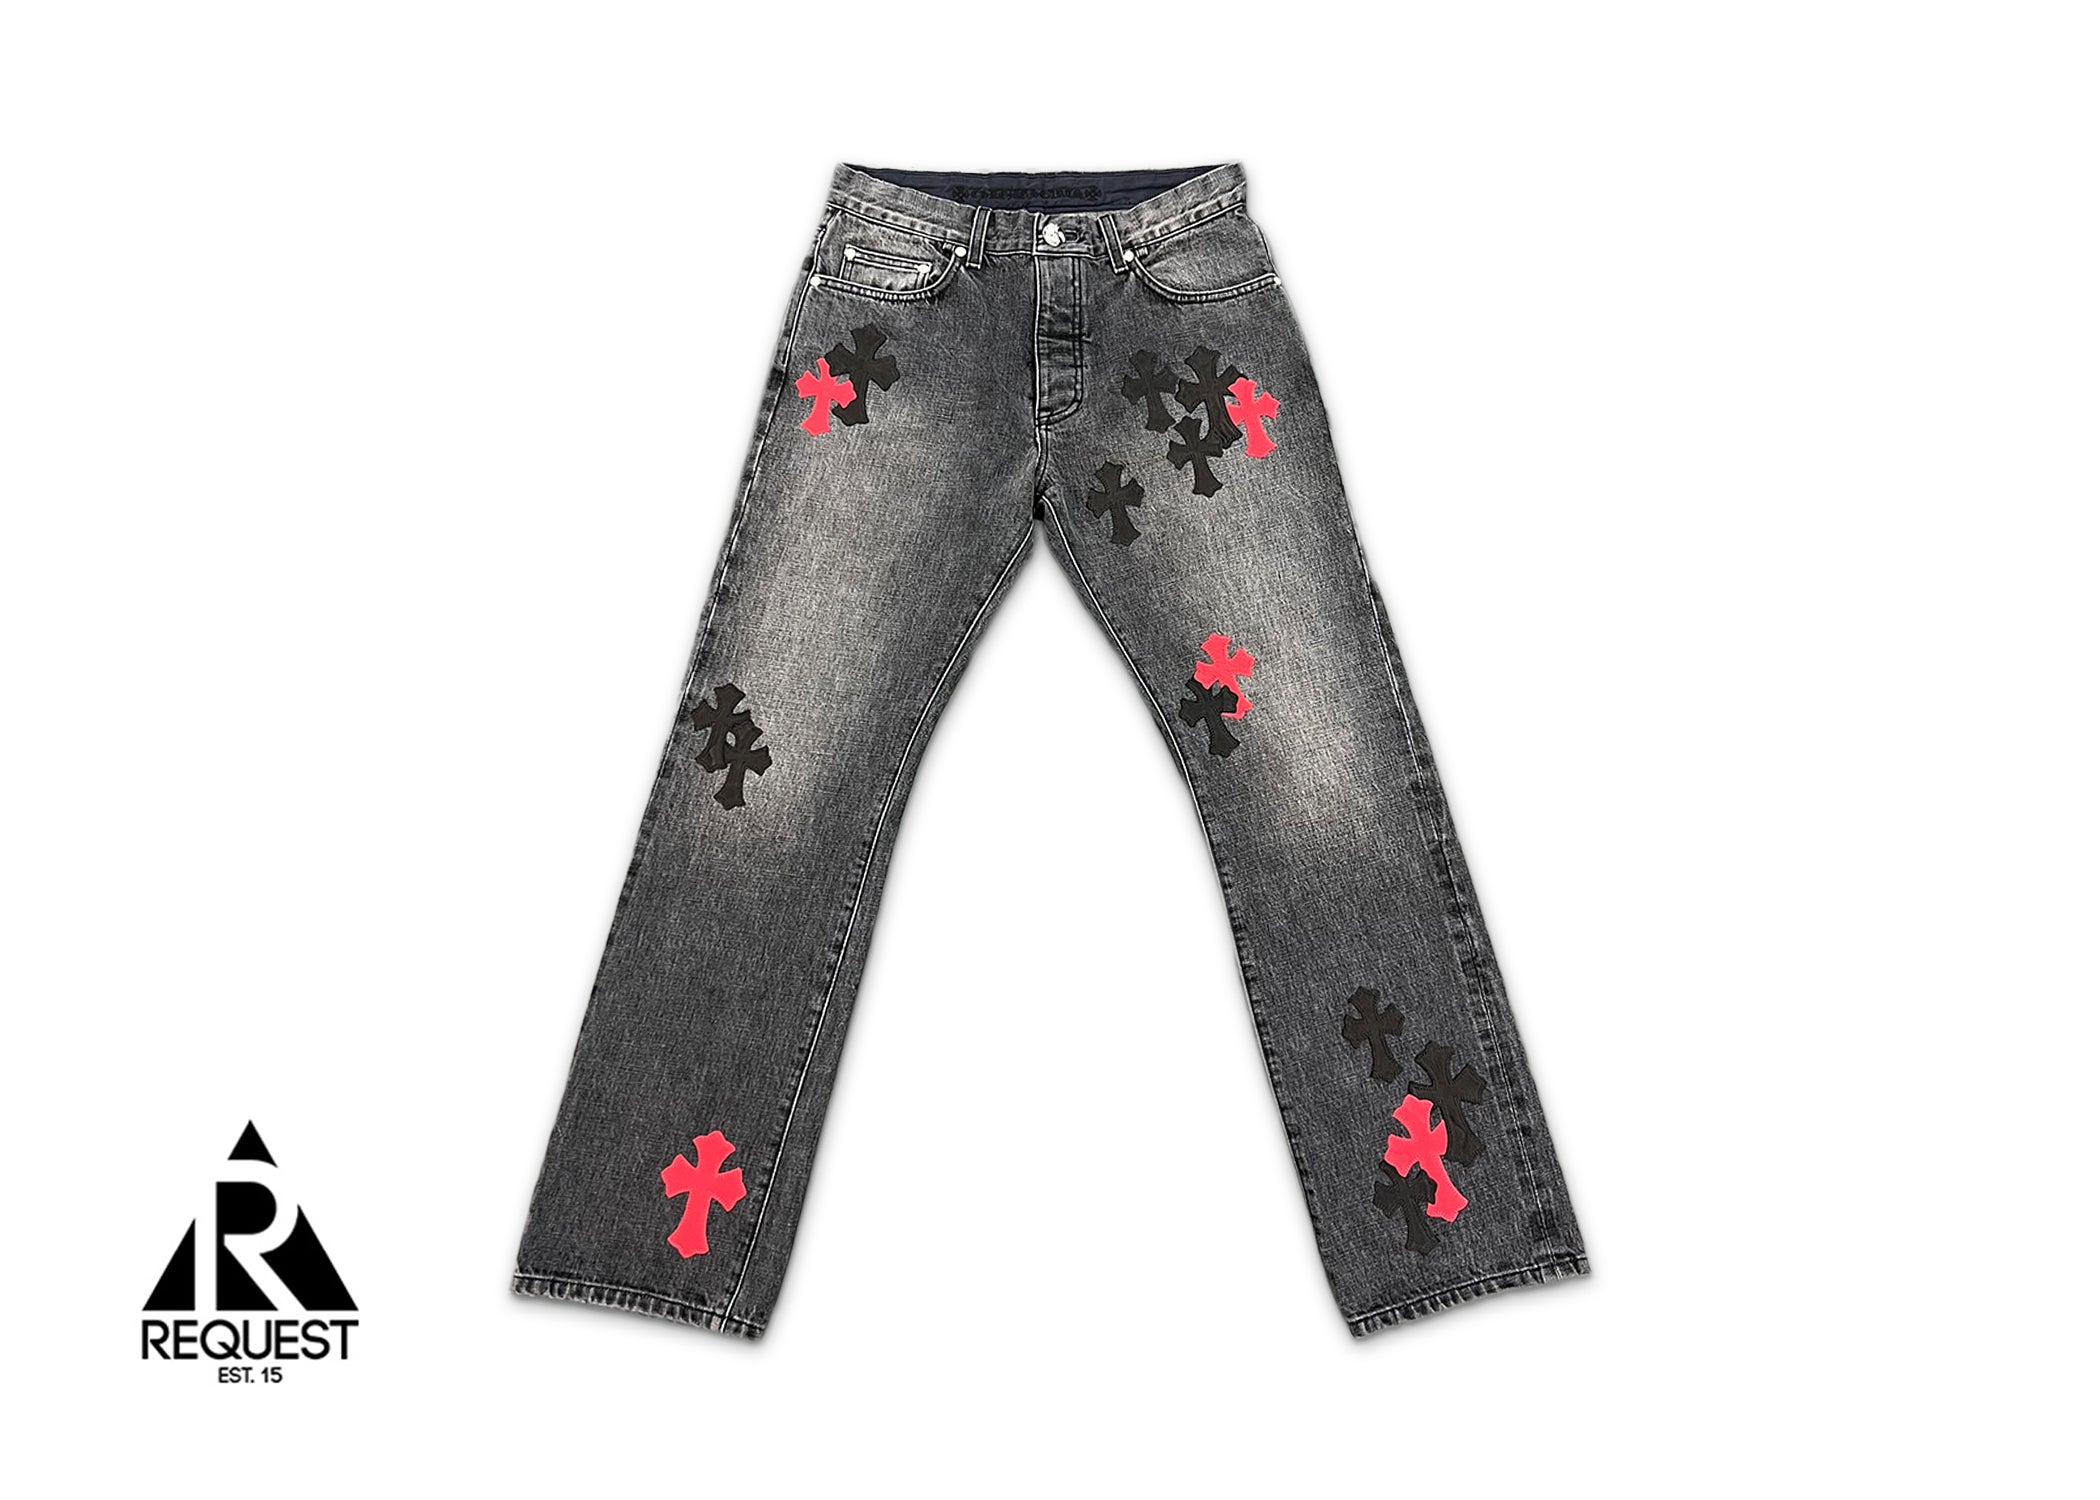 Chrome Hearts Cross Black Denim Shorts - ShopperBoard